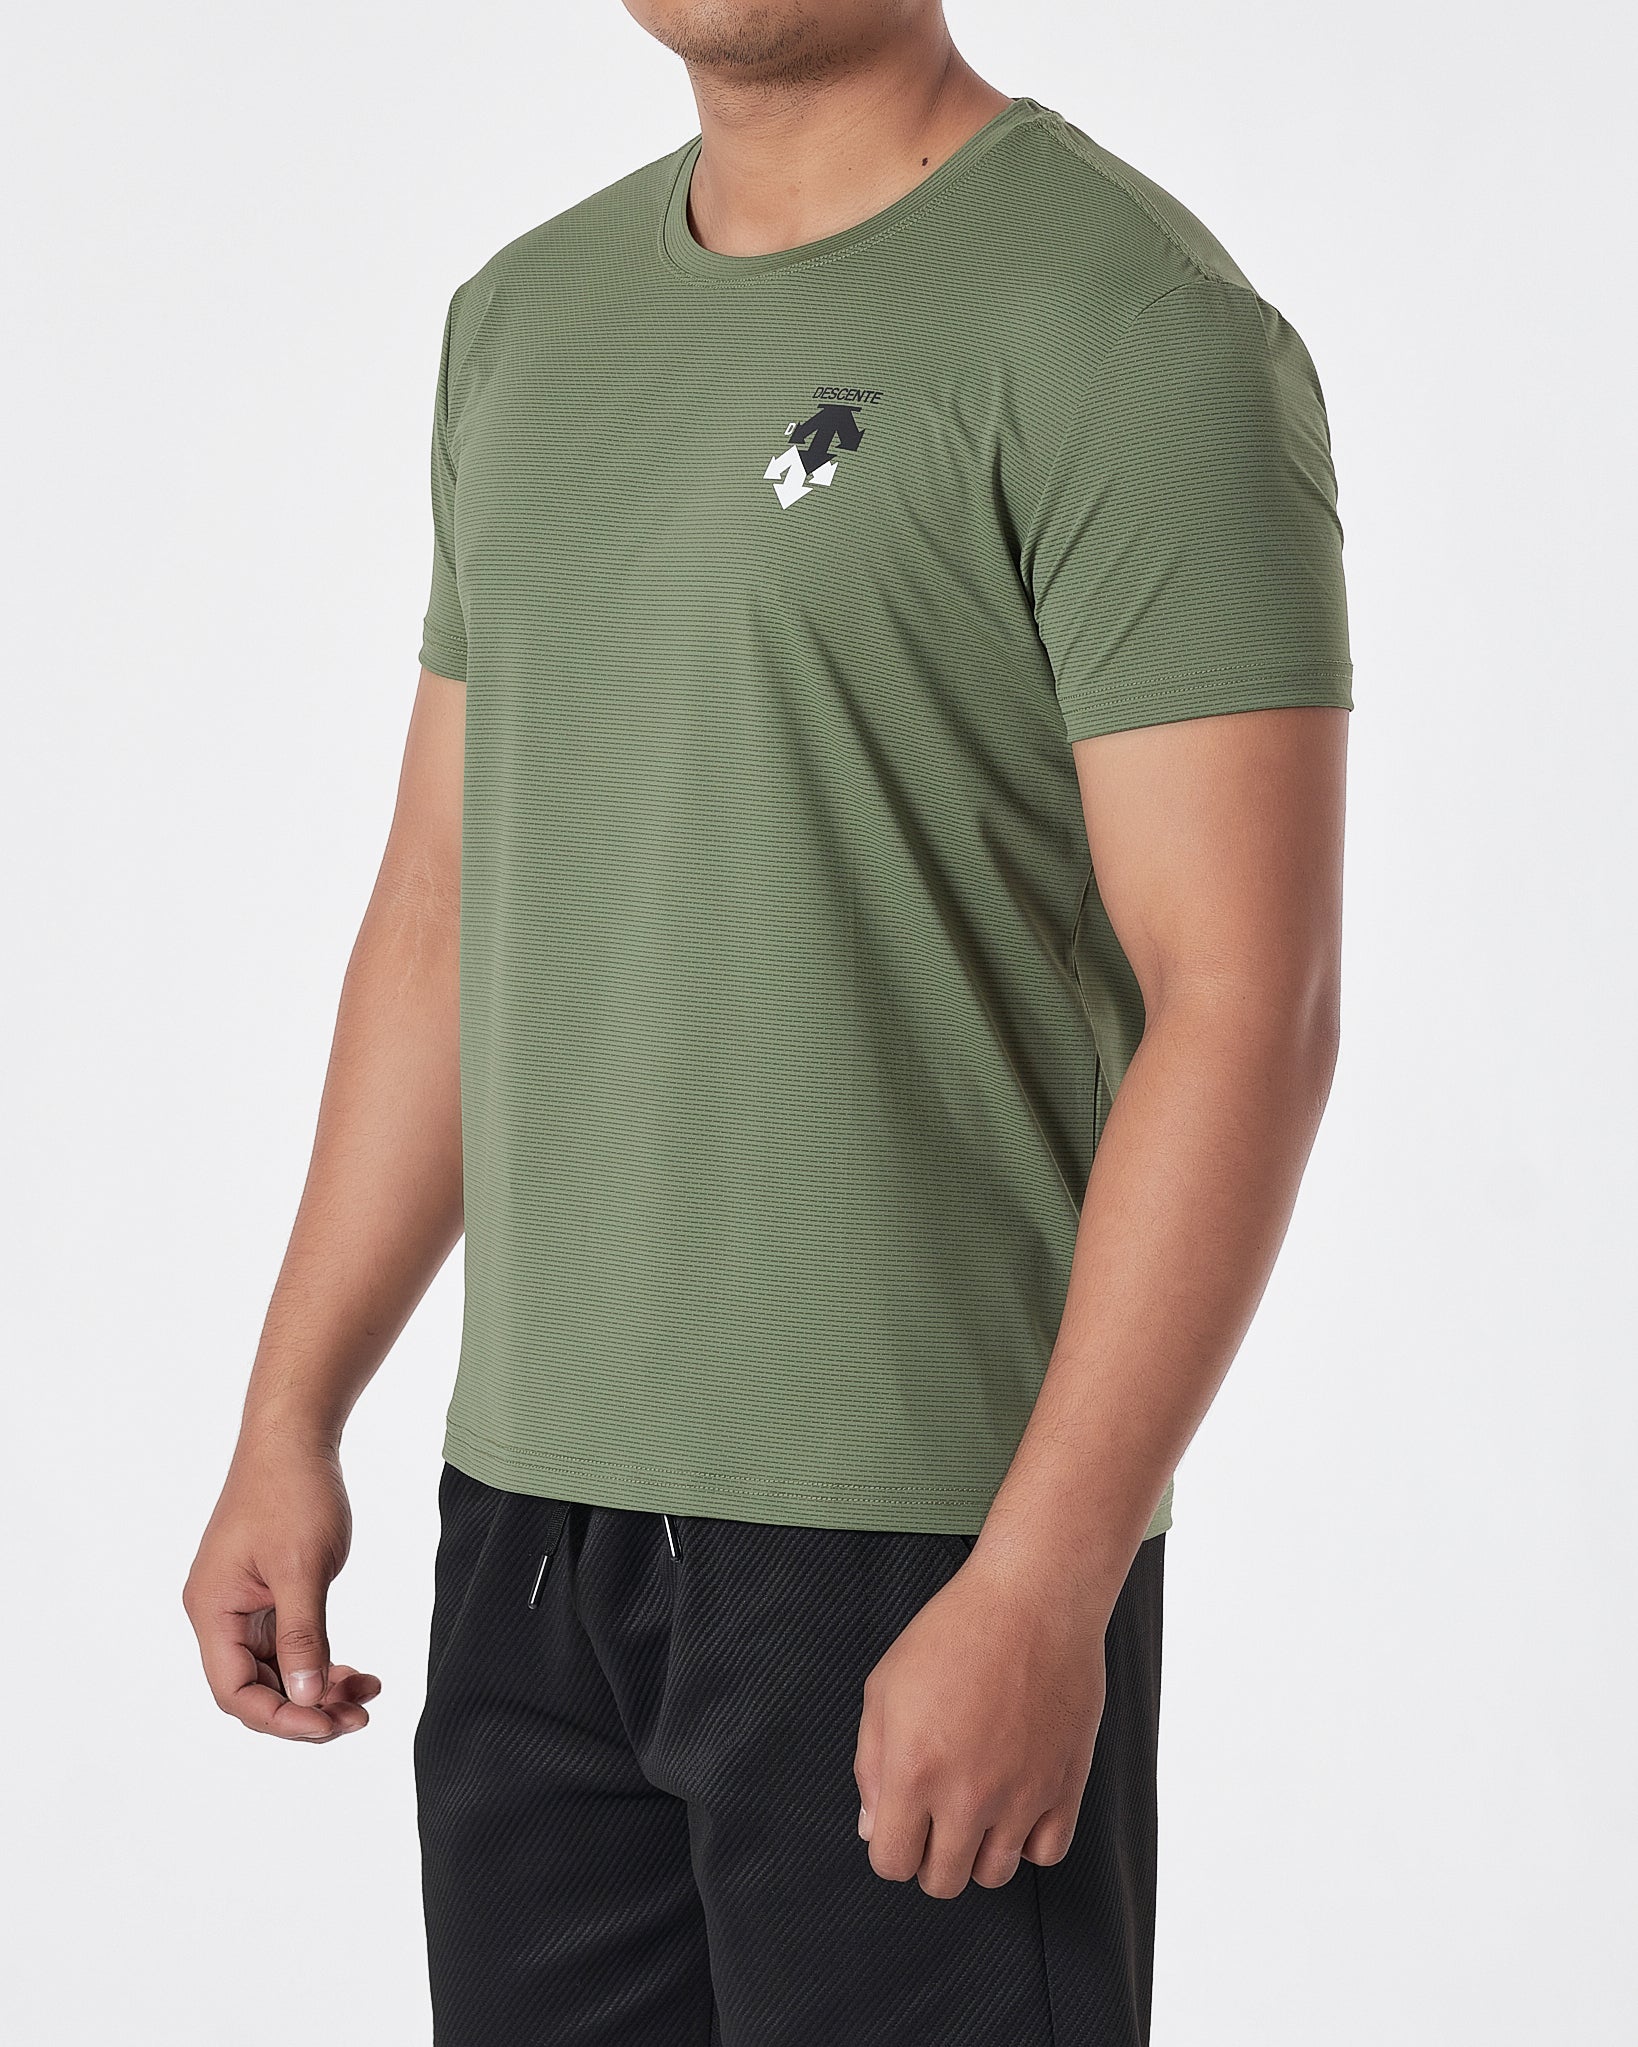 DES Logo Printed Men Green Sport T-Shirt 13.50